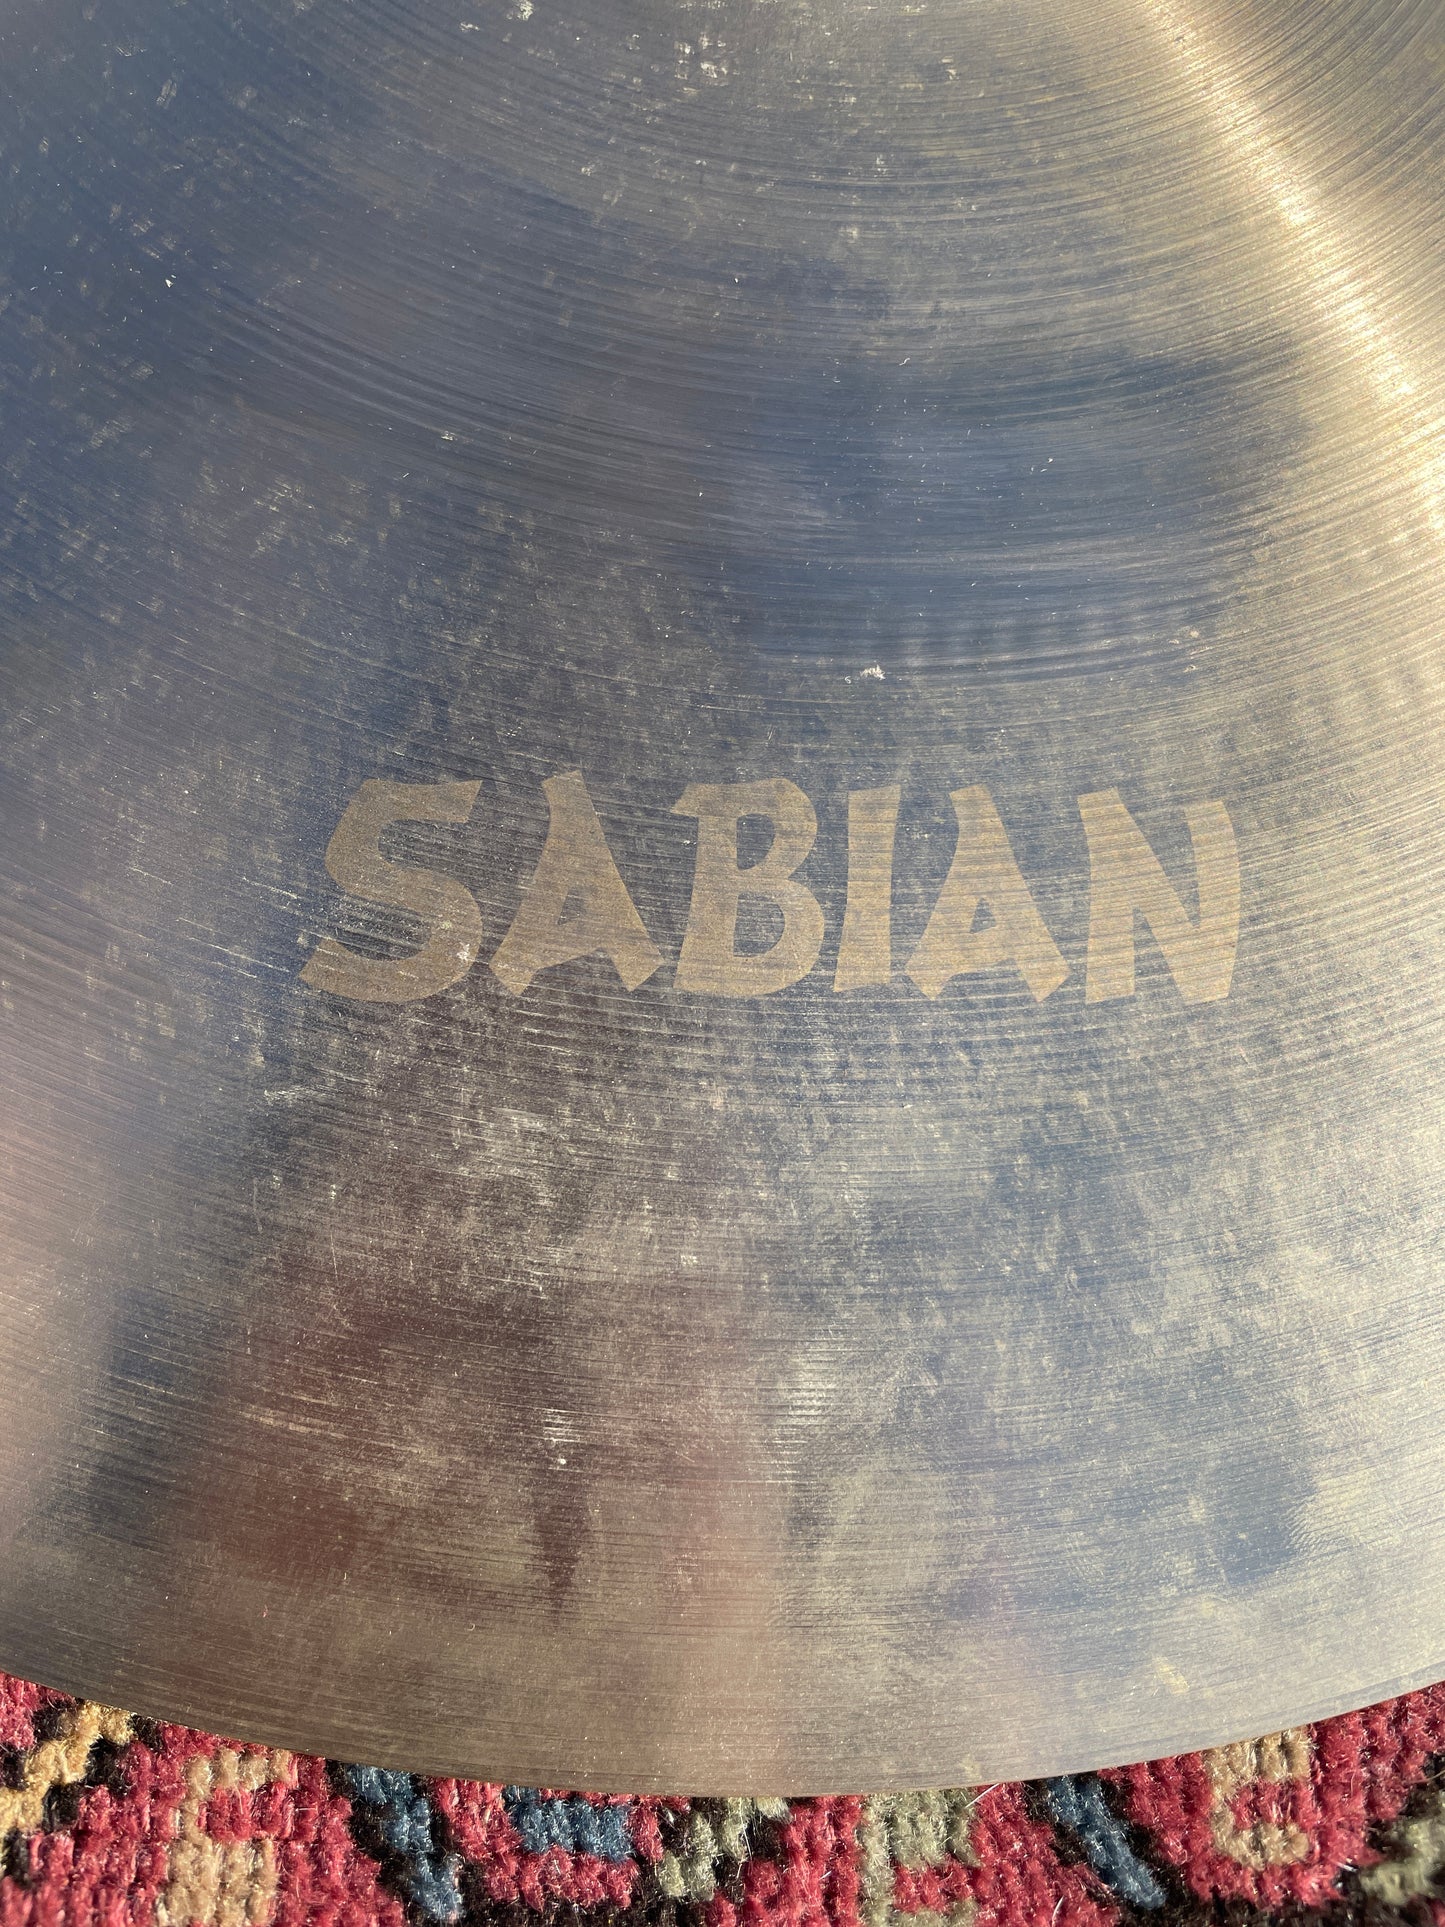 22" Sabian Paragon Ride Cymbal 3746g Neil Peart